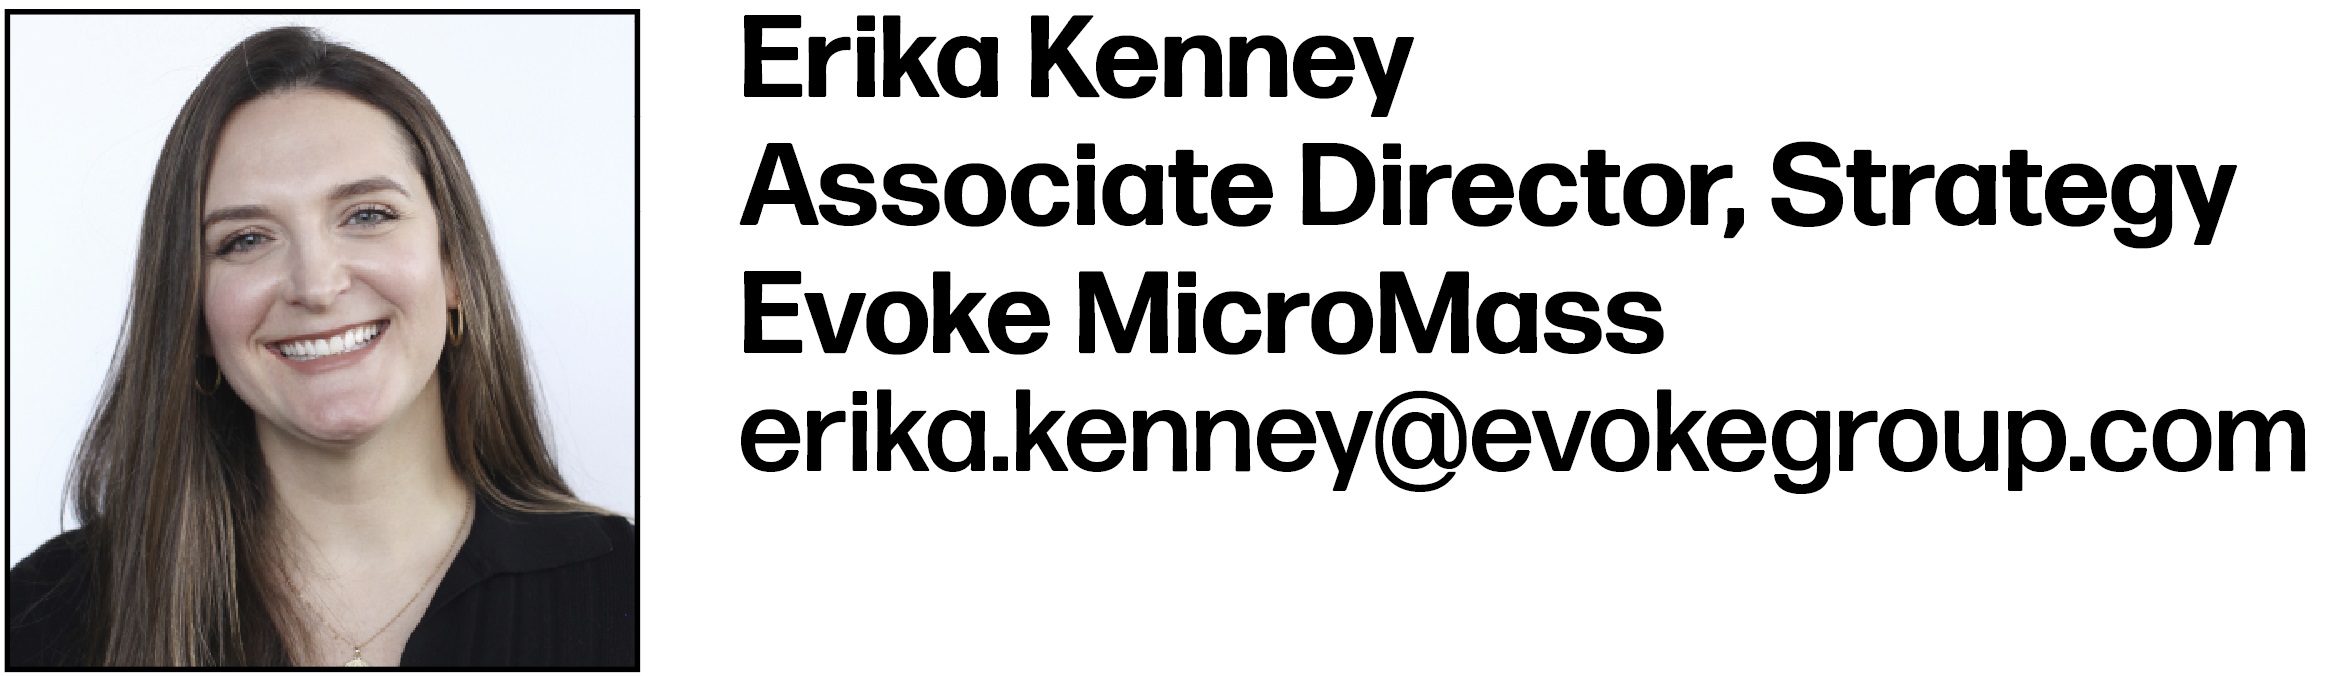 Erika Kenney Associate Director, Strategy Evoke MicroMass erika.kenney@evokegroup.com